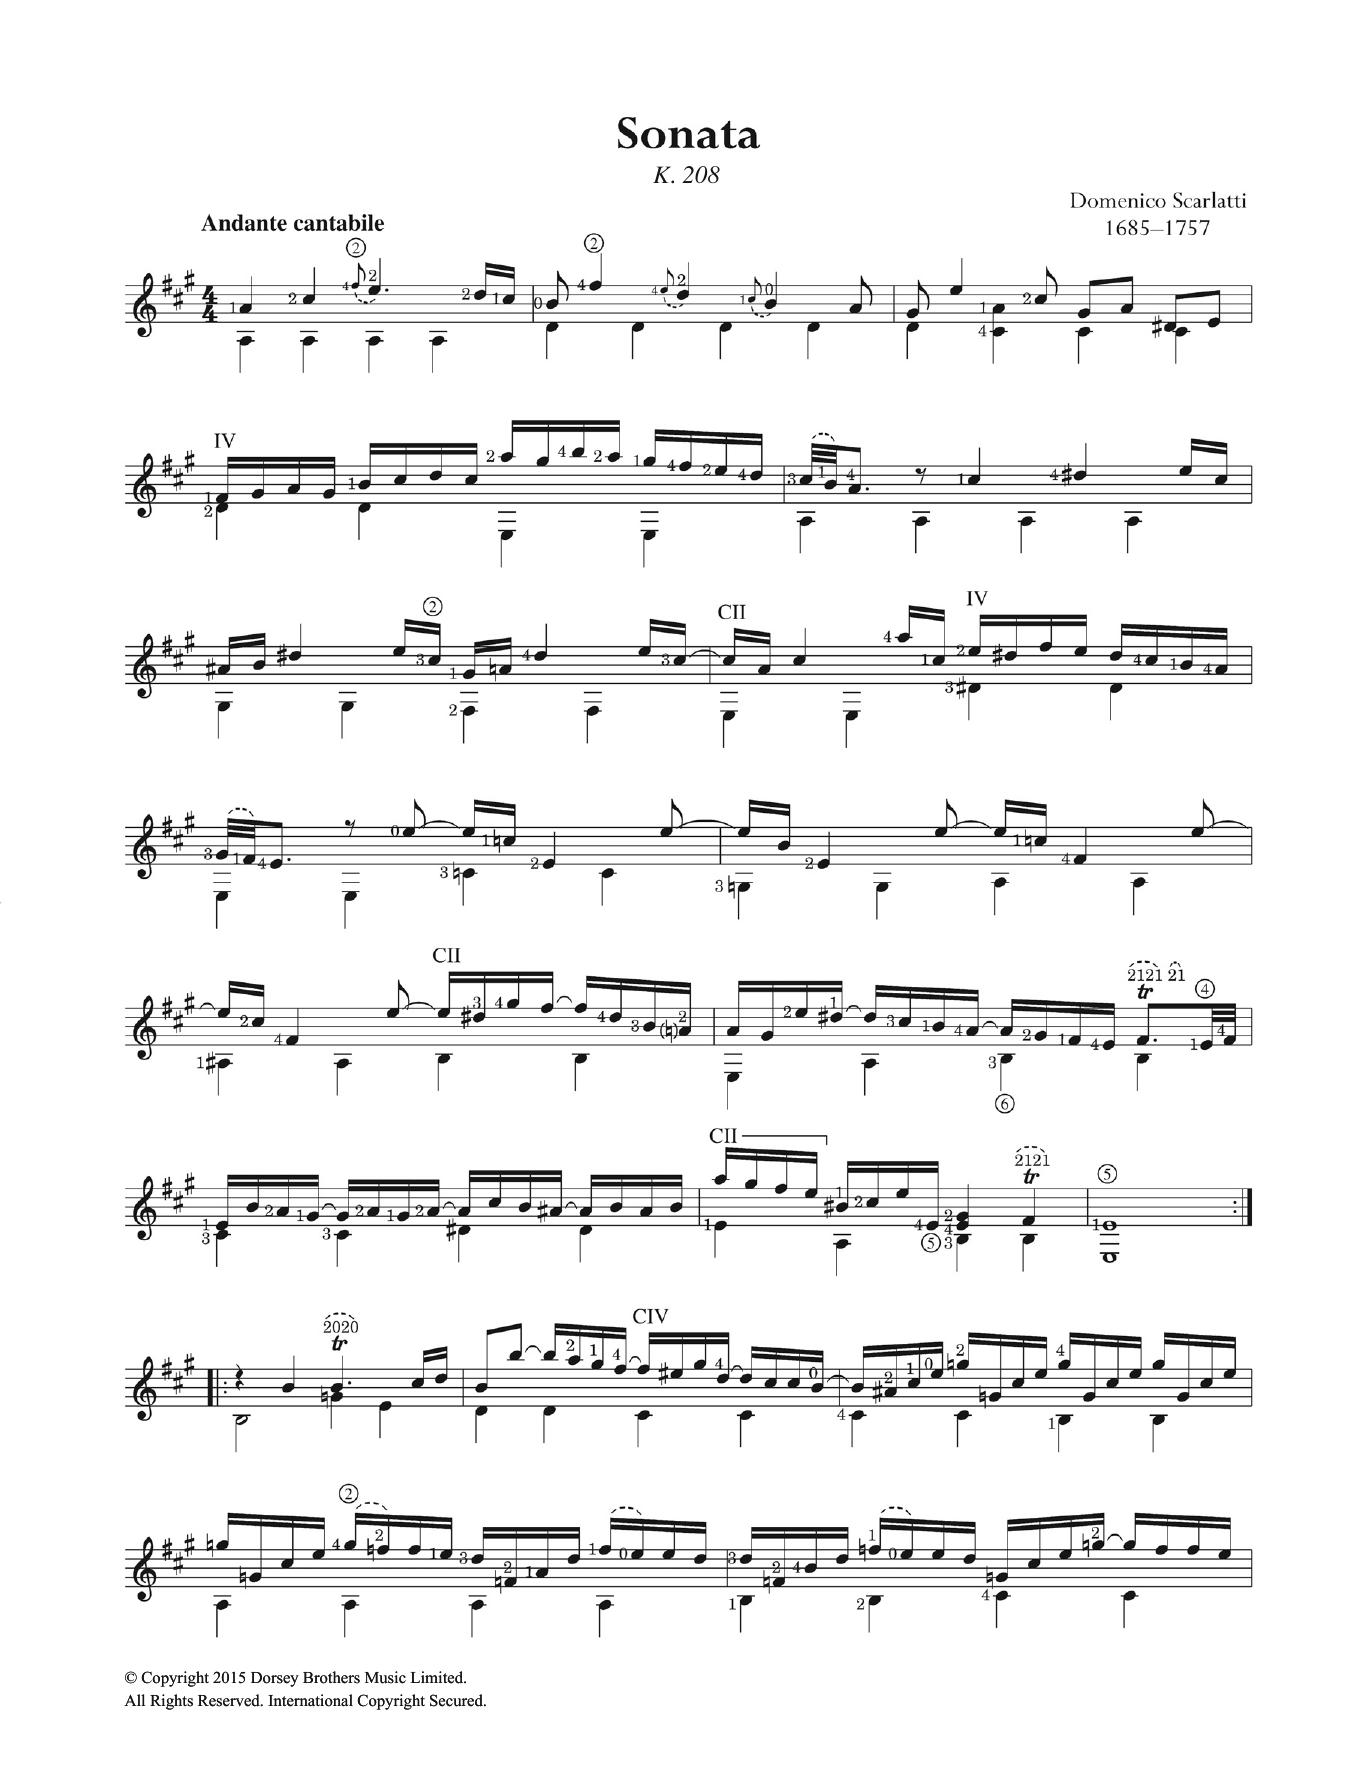 Download Domenico Scarlatti Sonata K.208 Sheet Music and learn how to play Guitar PDF digital score in minutes